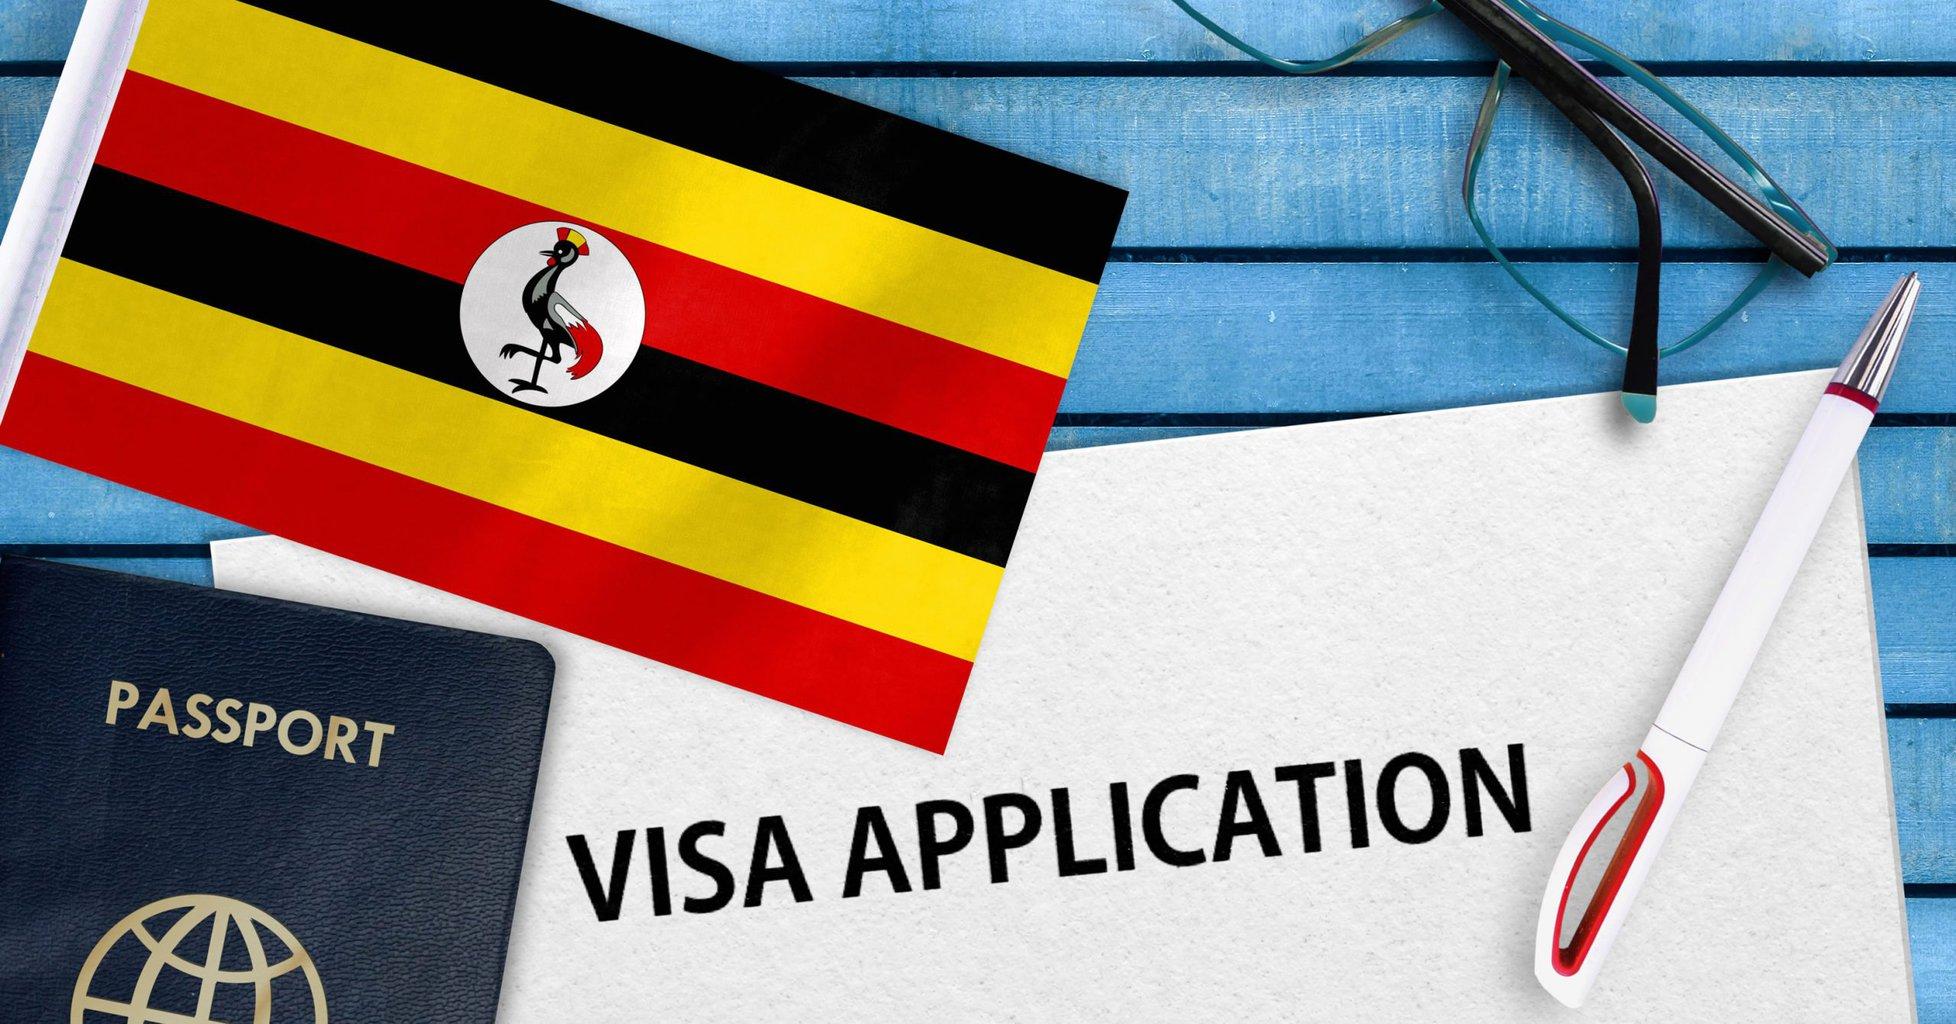 Uganda Visa